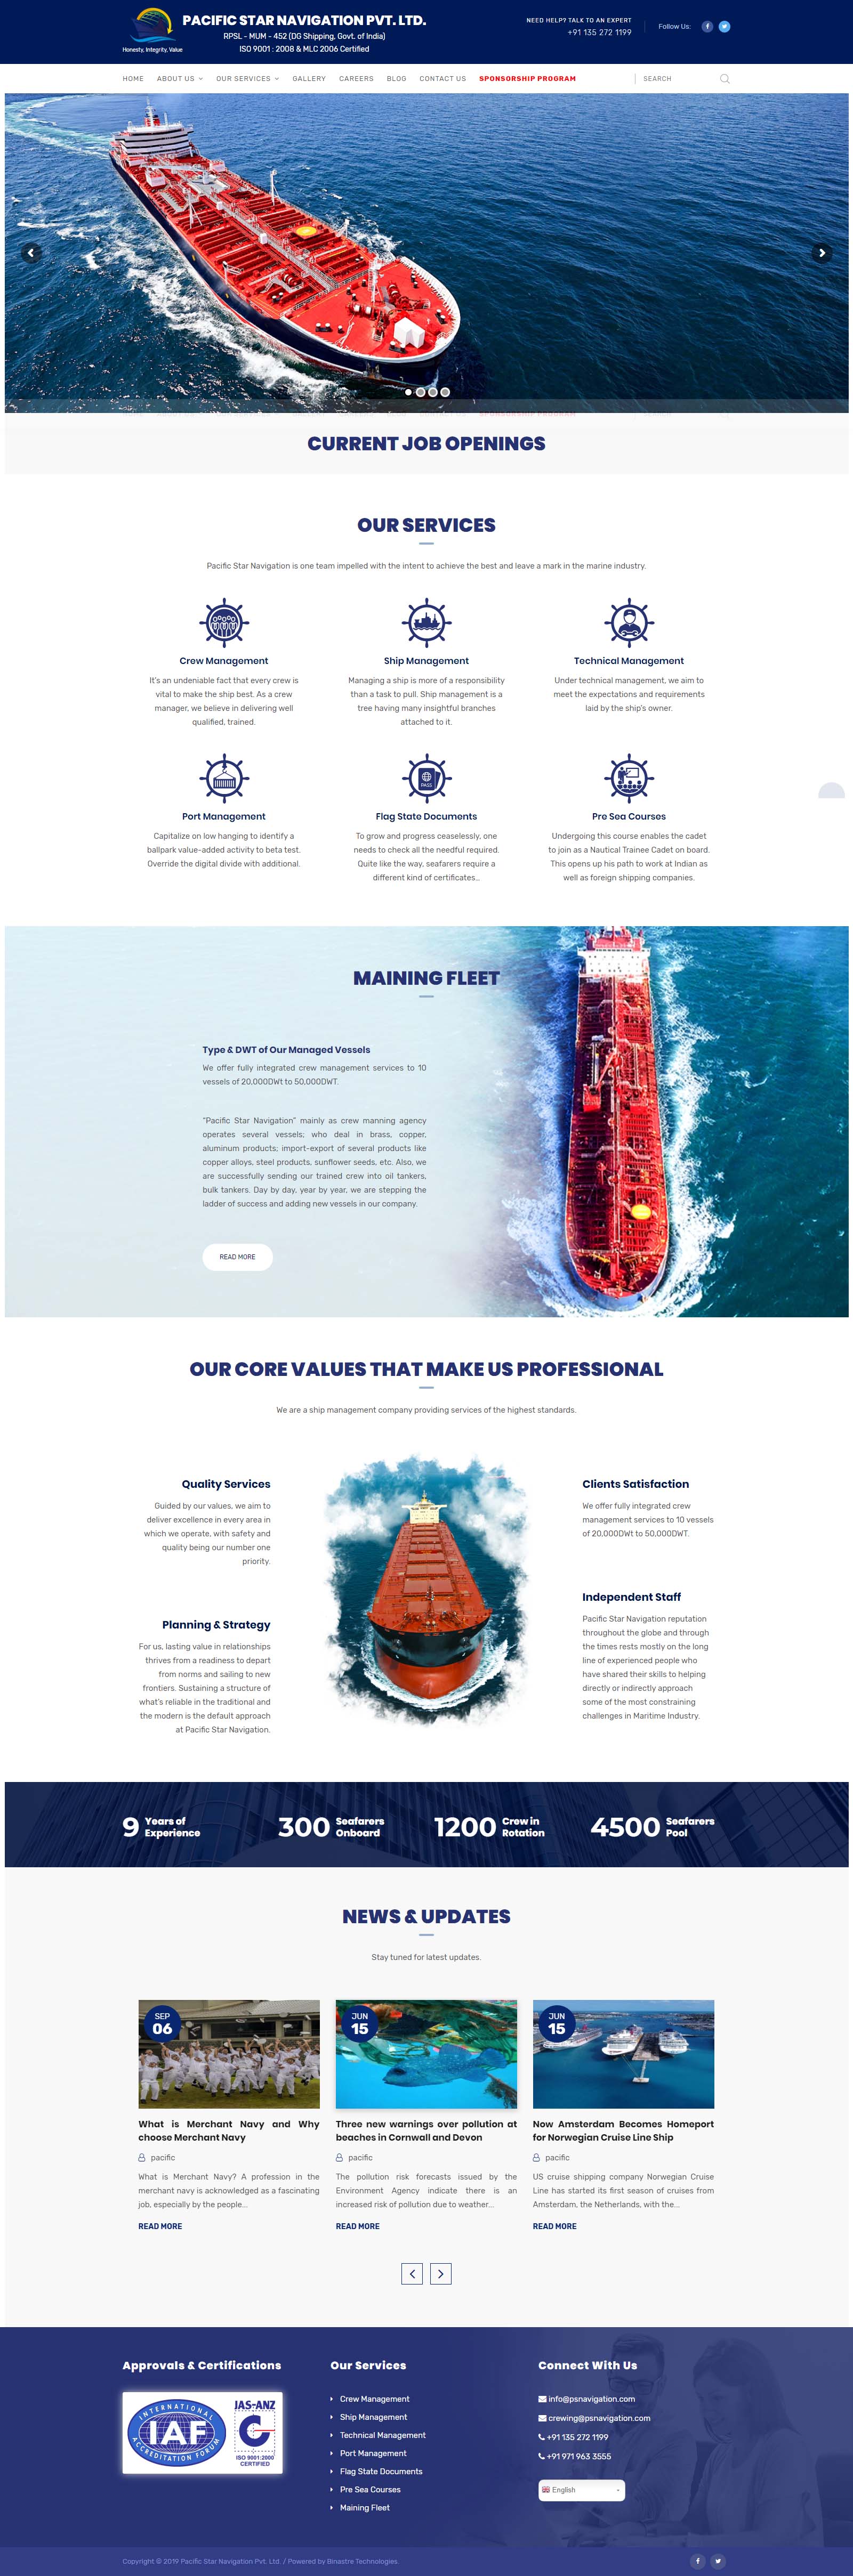 pacific-star-navigation-pvt-ltd-homepage